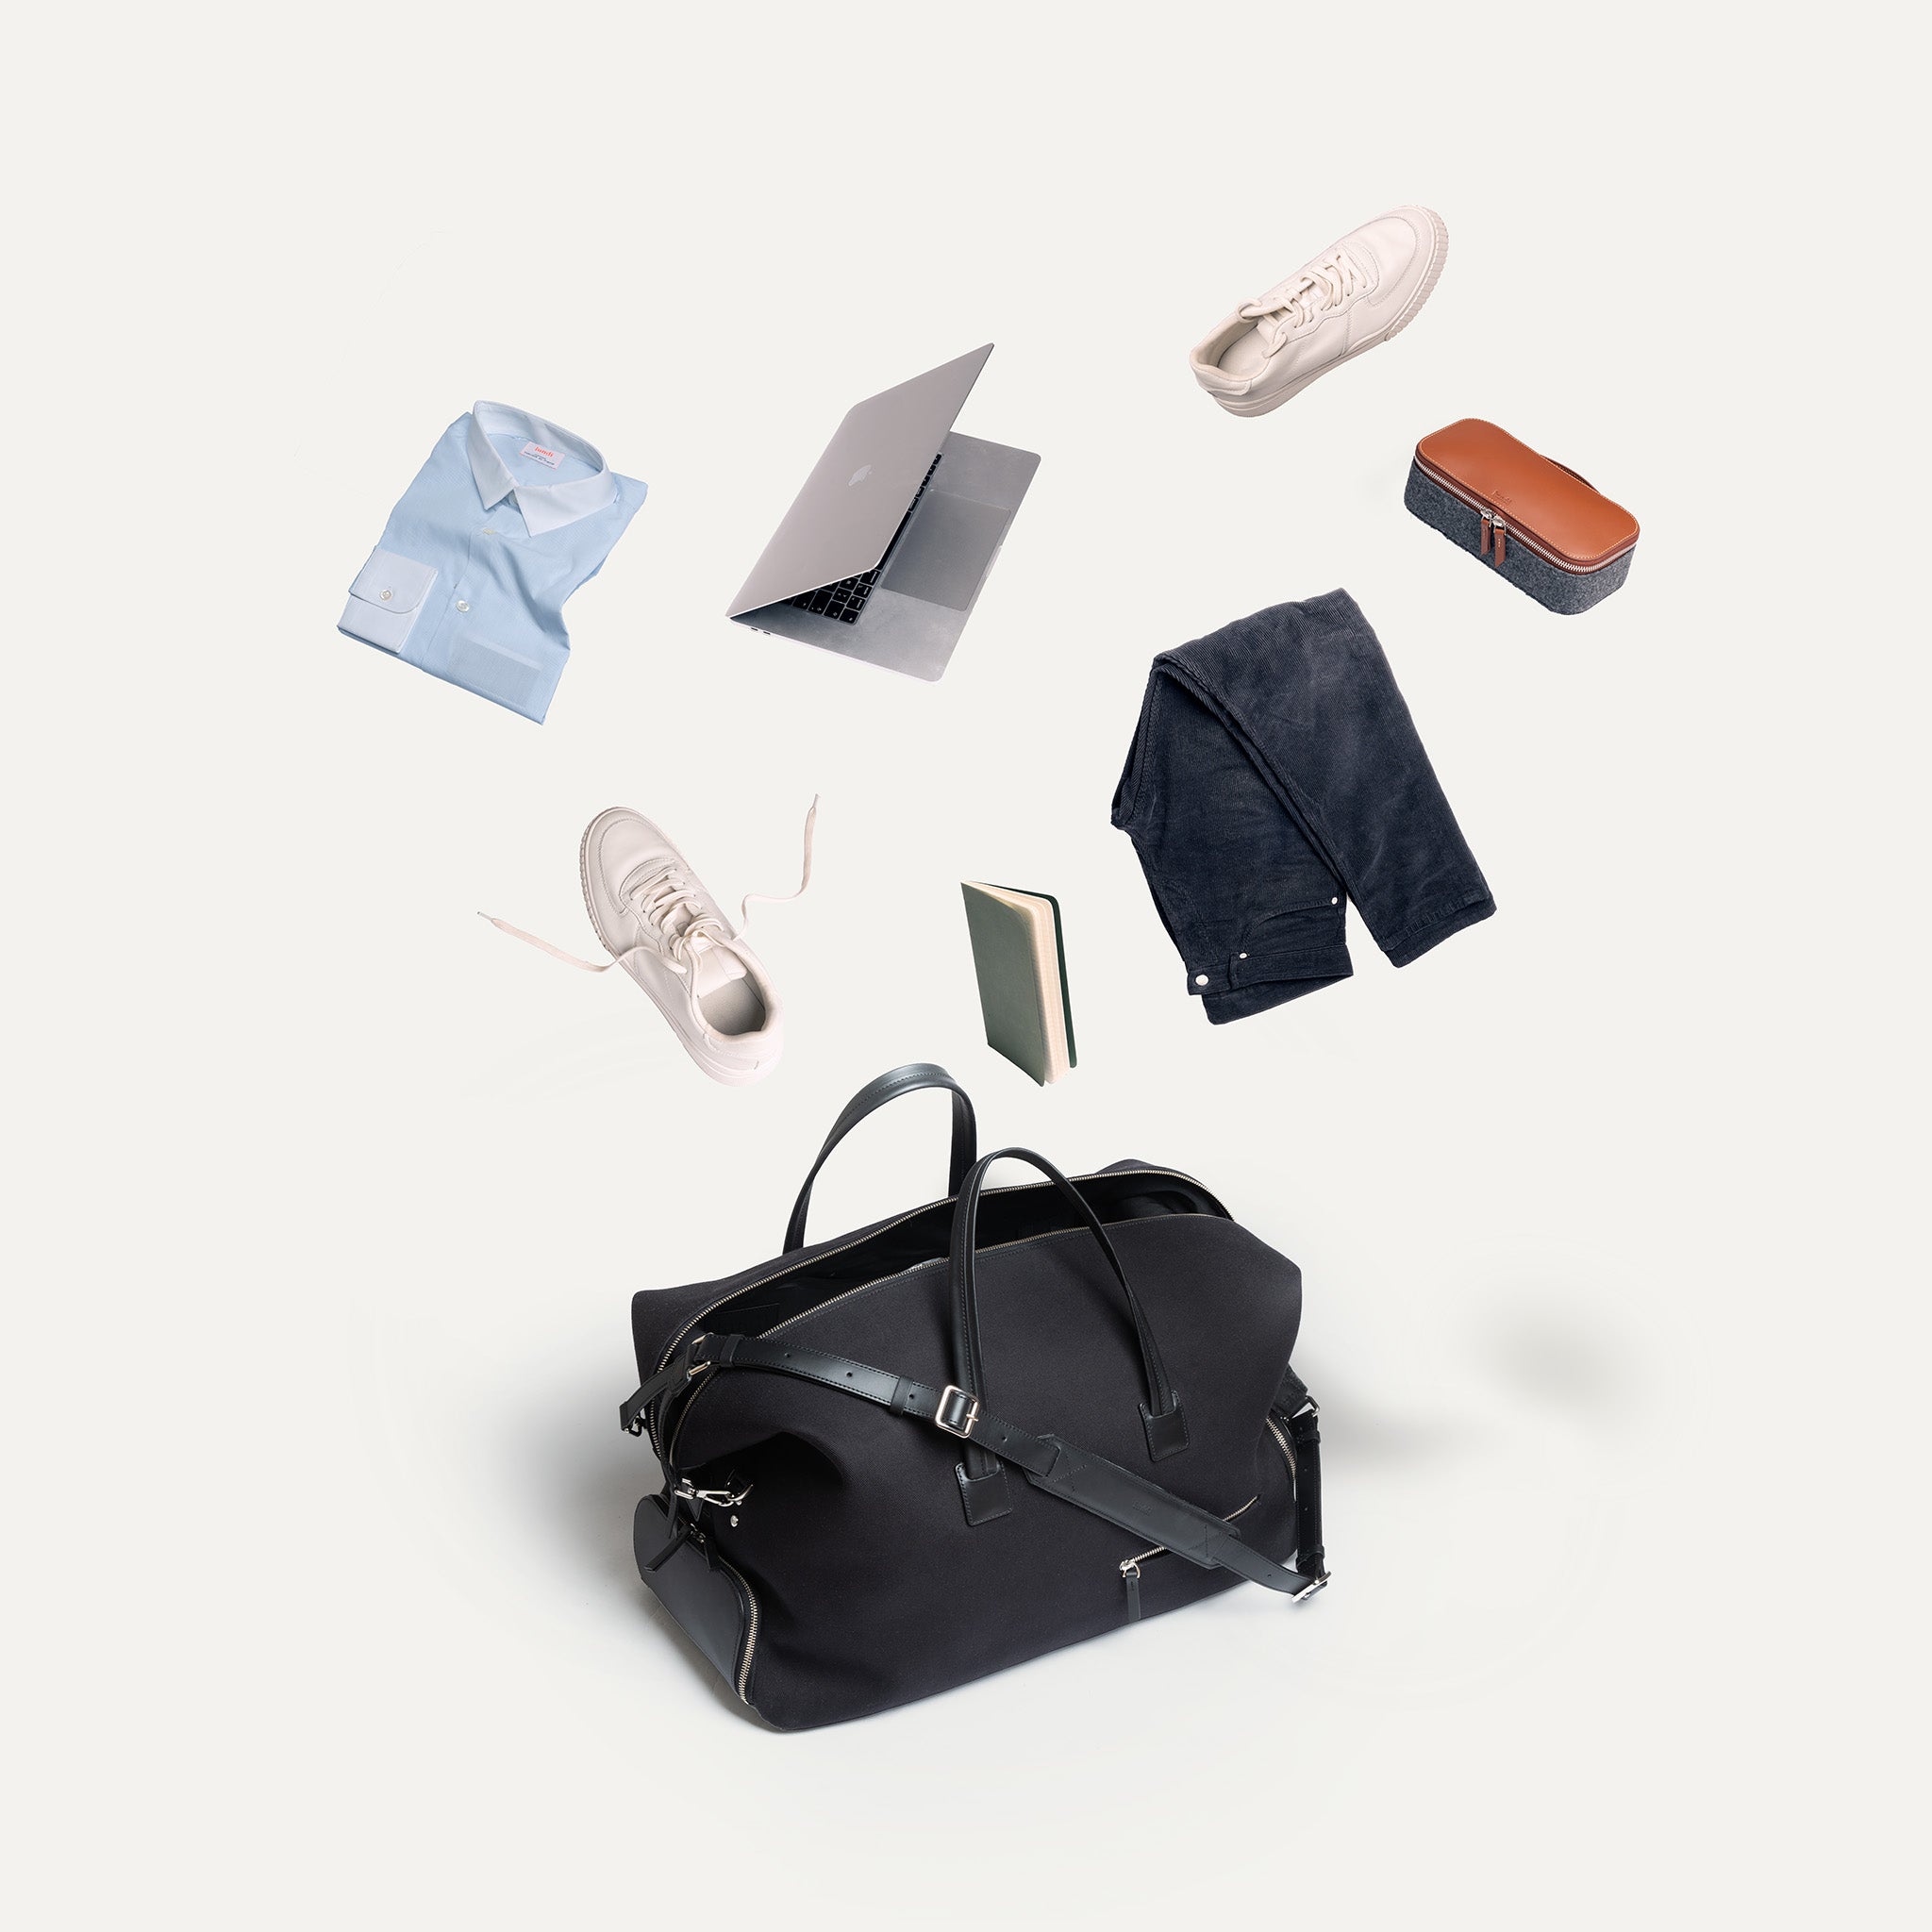 REMINGTON, Black | lundi Cotton and Leather Travel bag